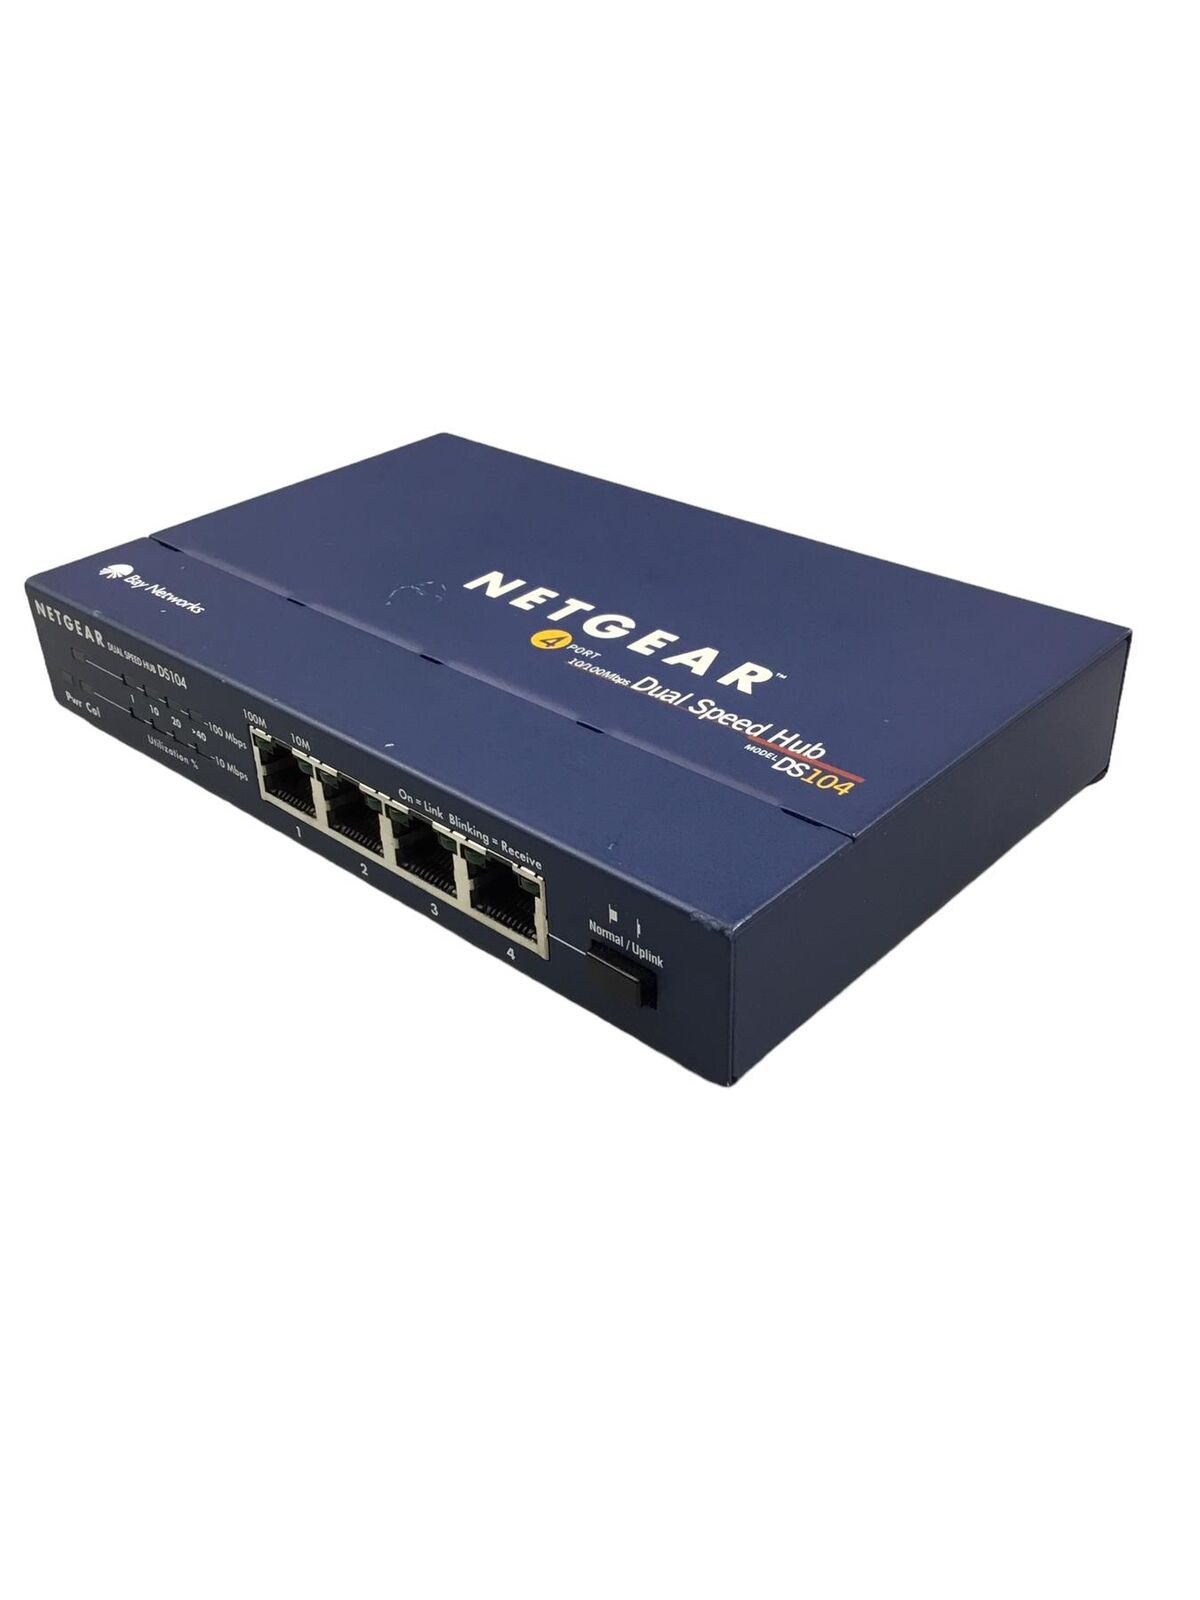 Netgear DS104 Ethernet Switch 4-Port 10/100Mbps Dual Speed Hub 12v - Untested